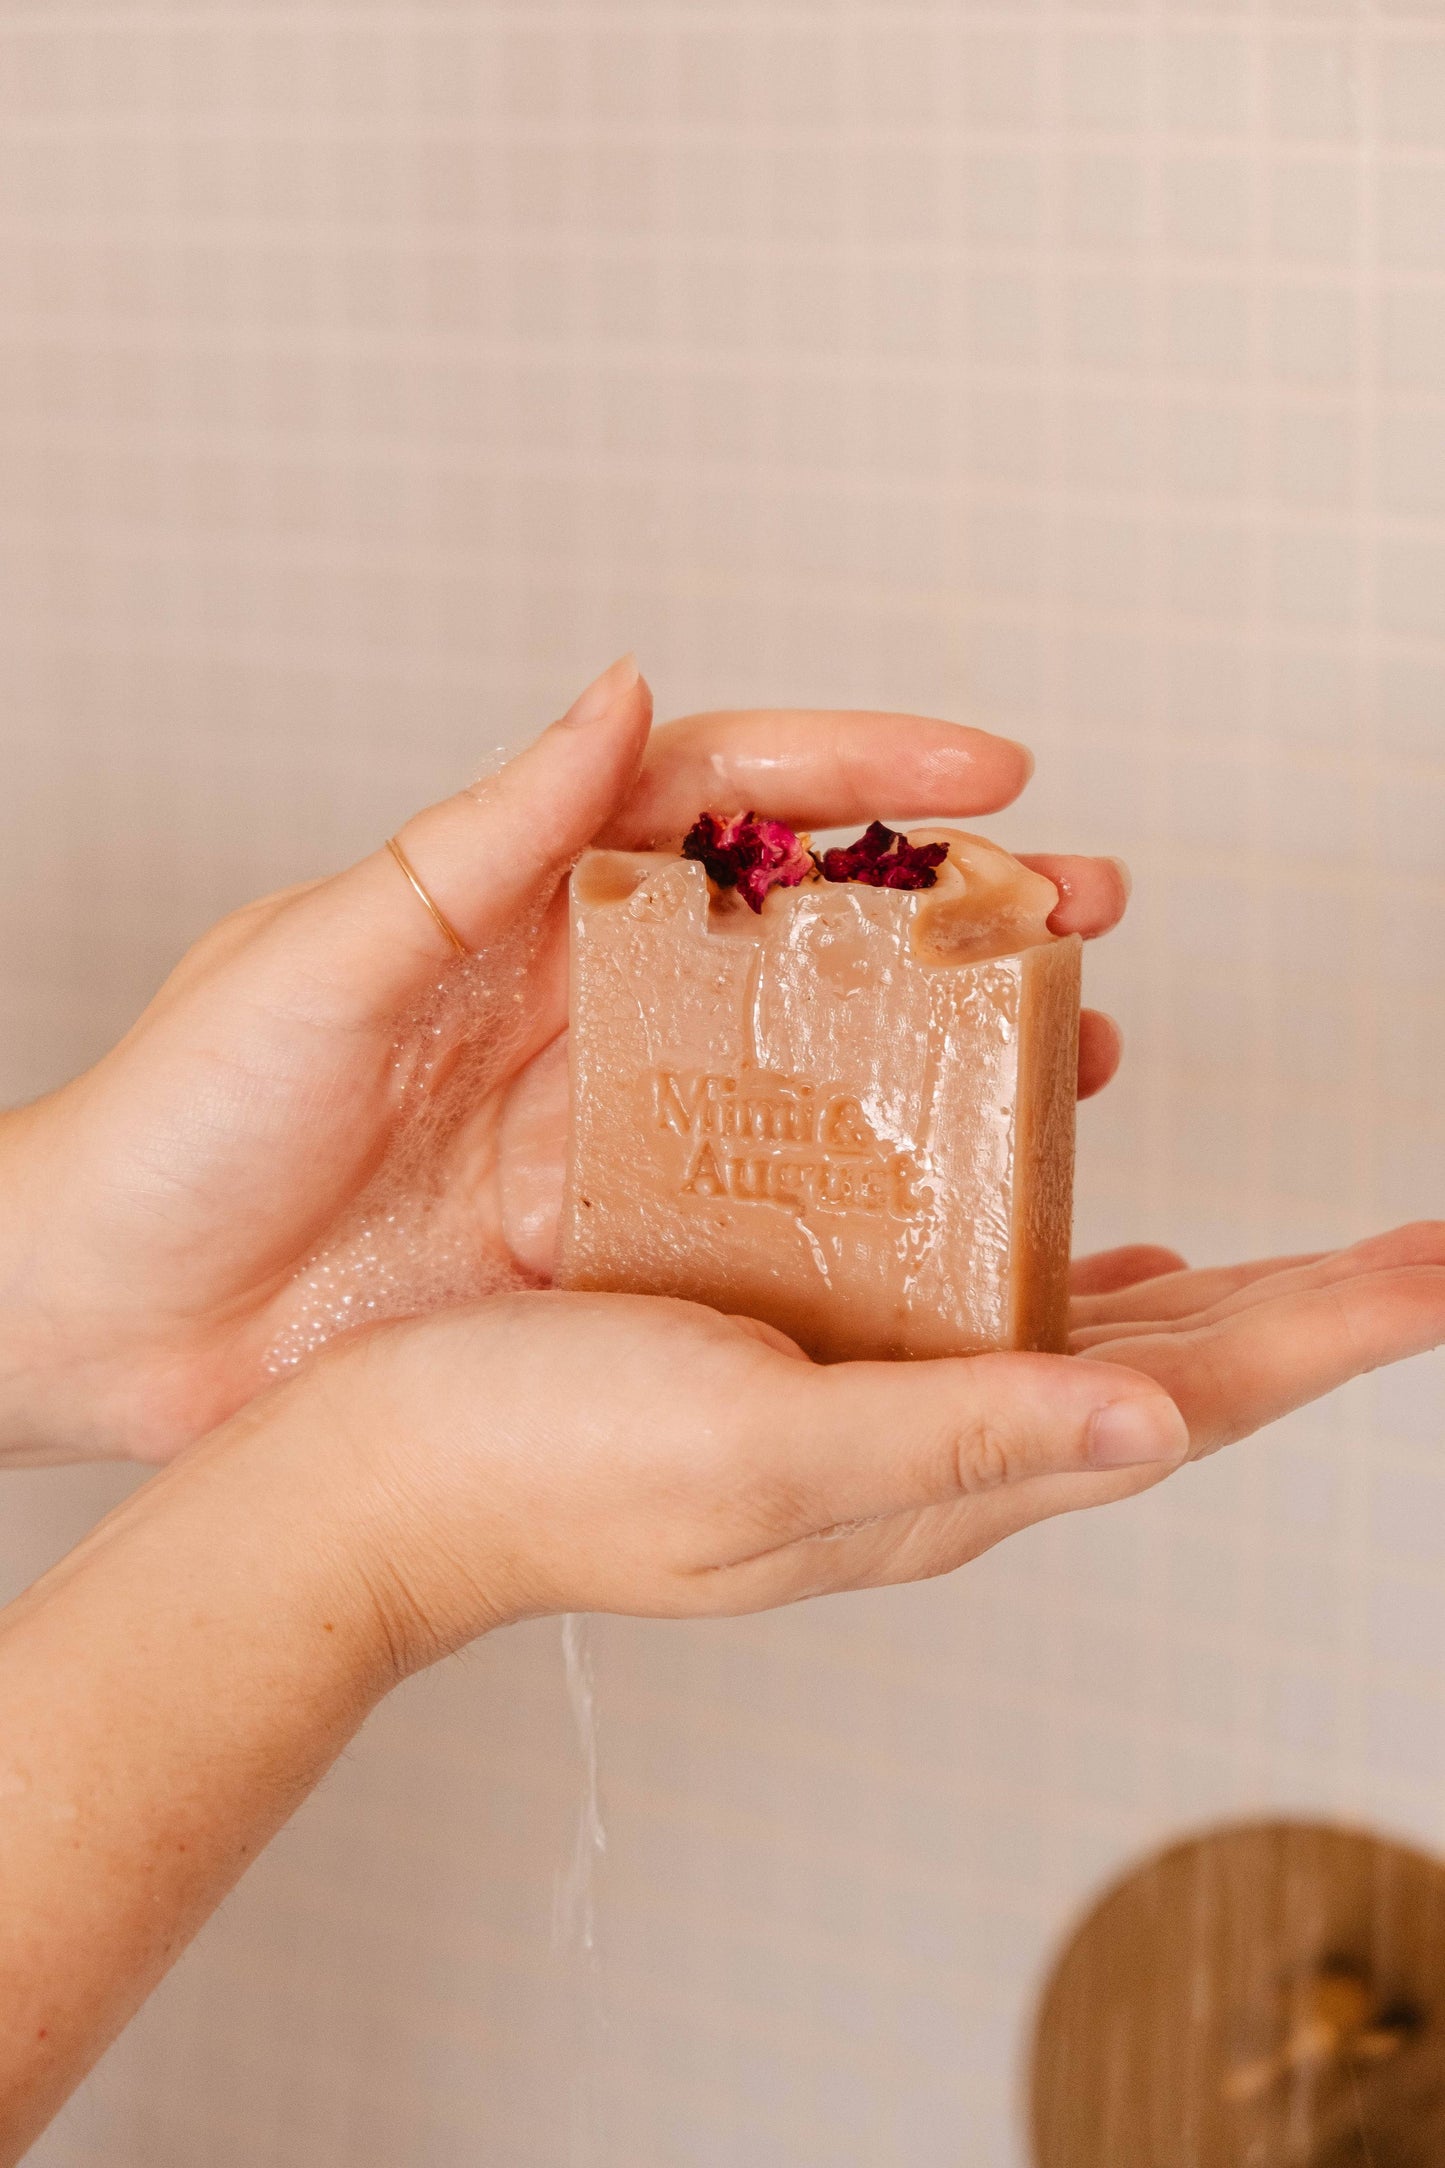 Mimi & August - Sweet Rose Bar Soap